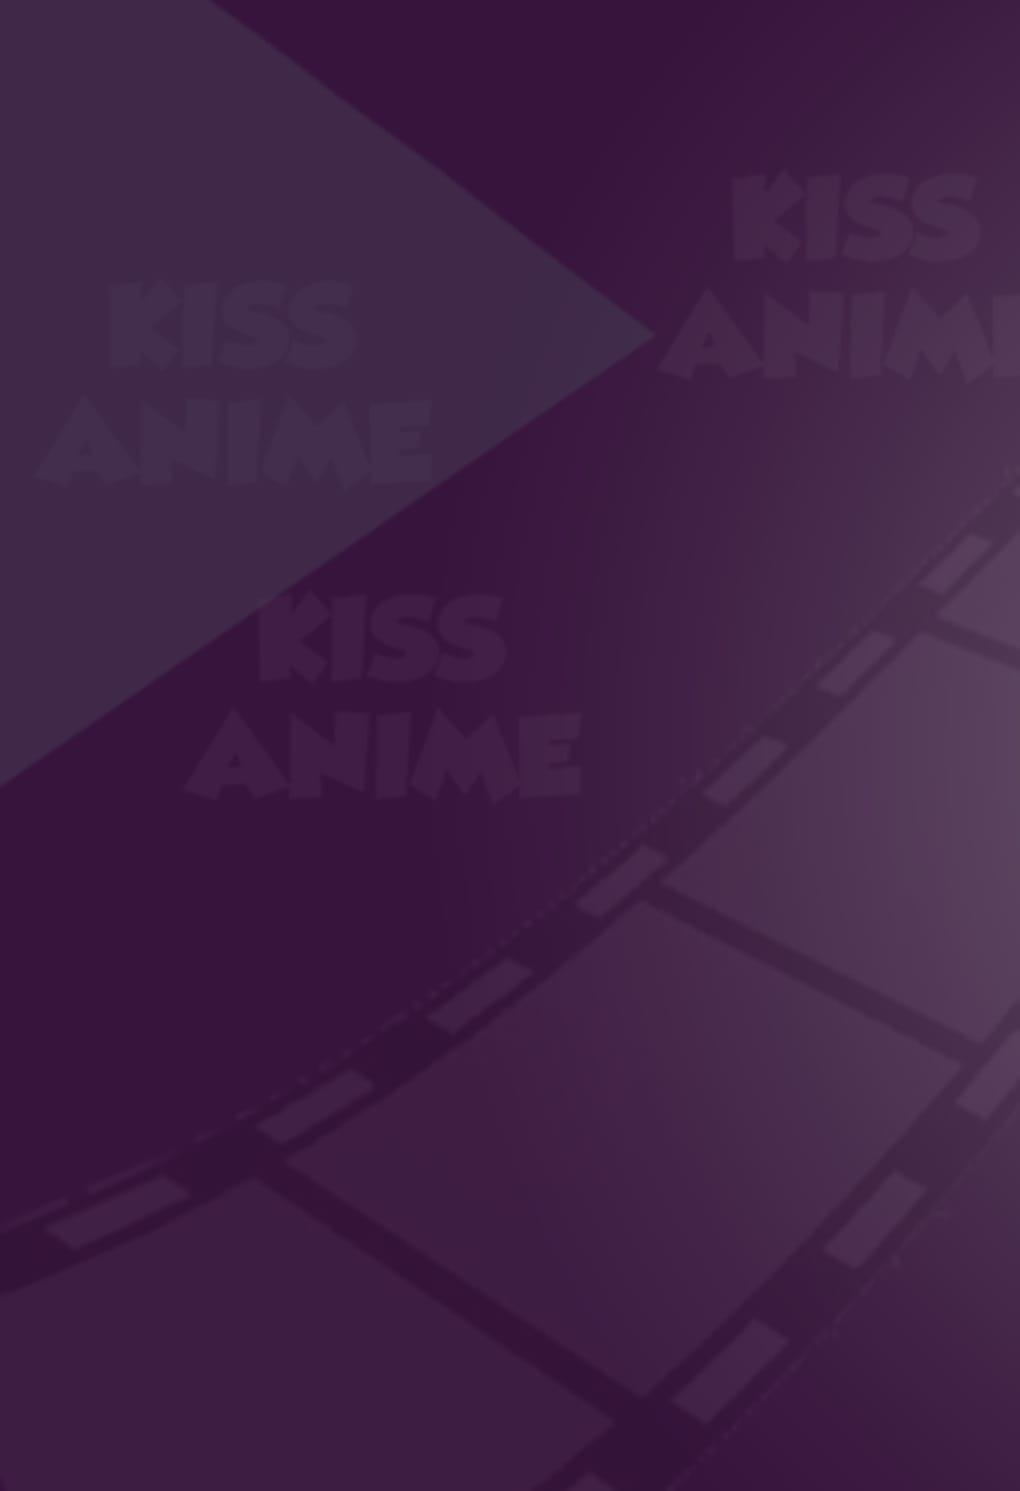 Kissanime Apk v2.2 Latest Version 2022 - Kissanime